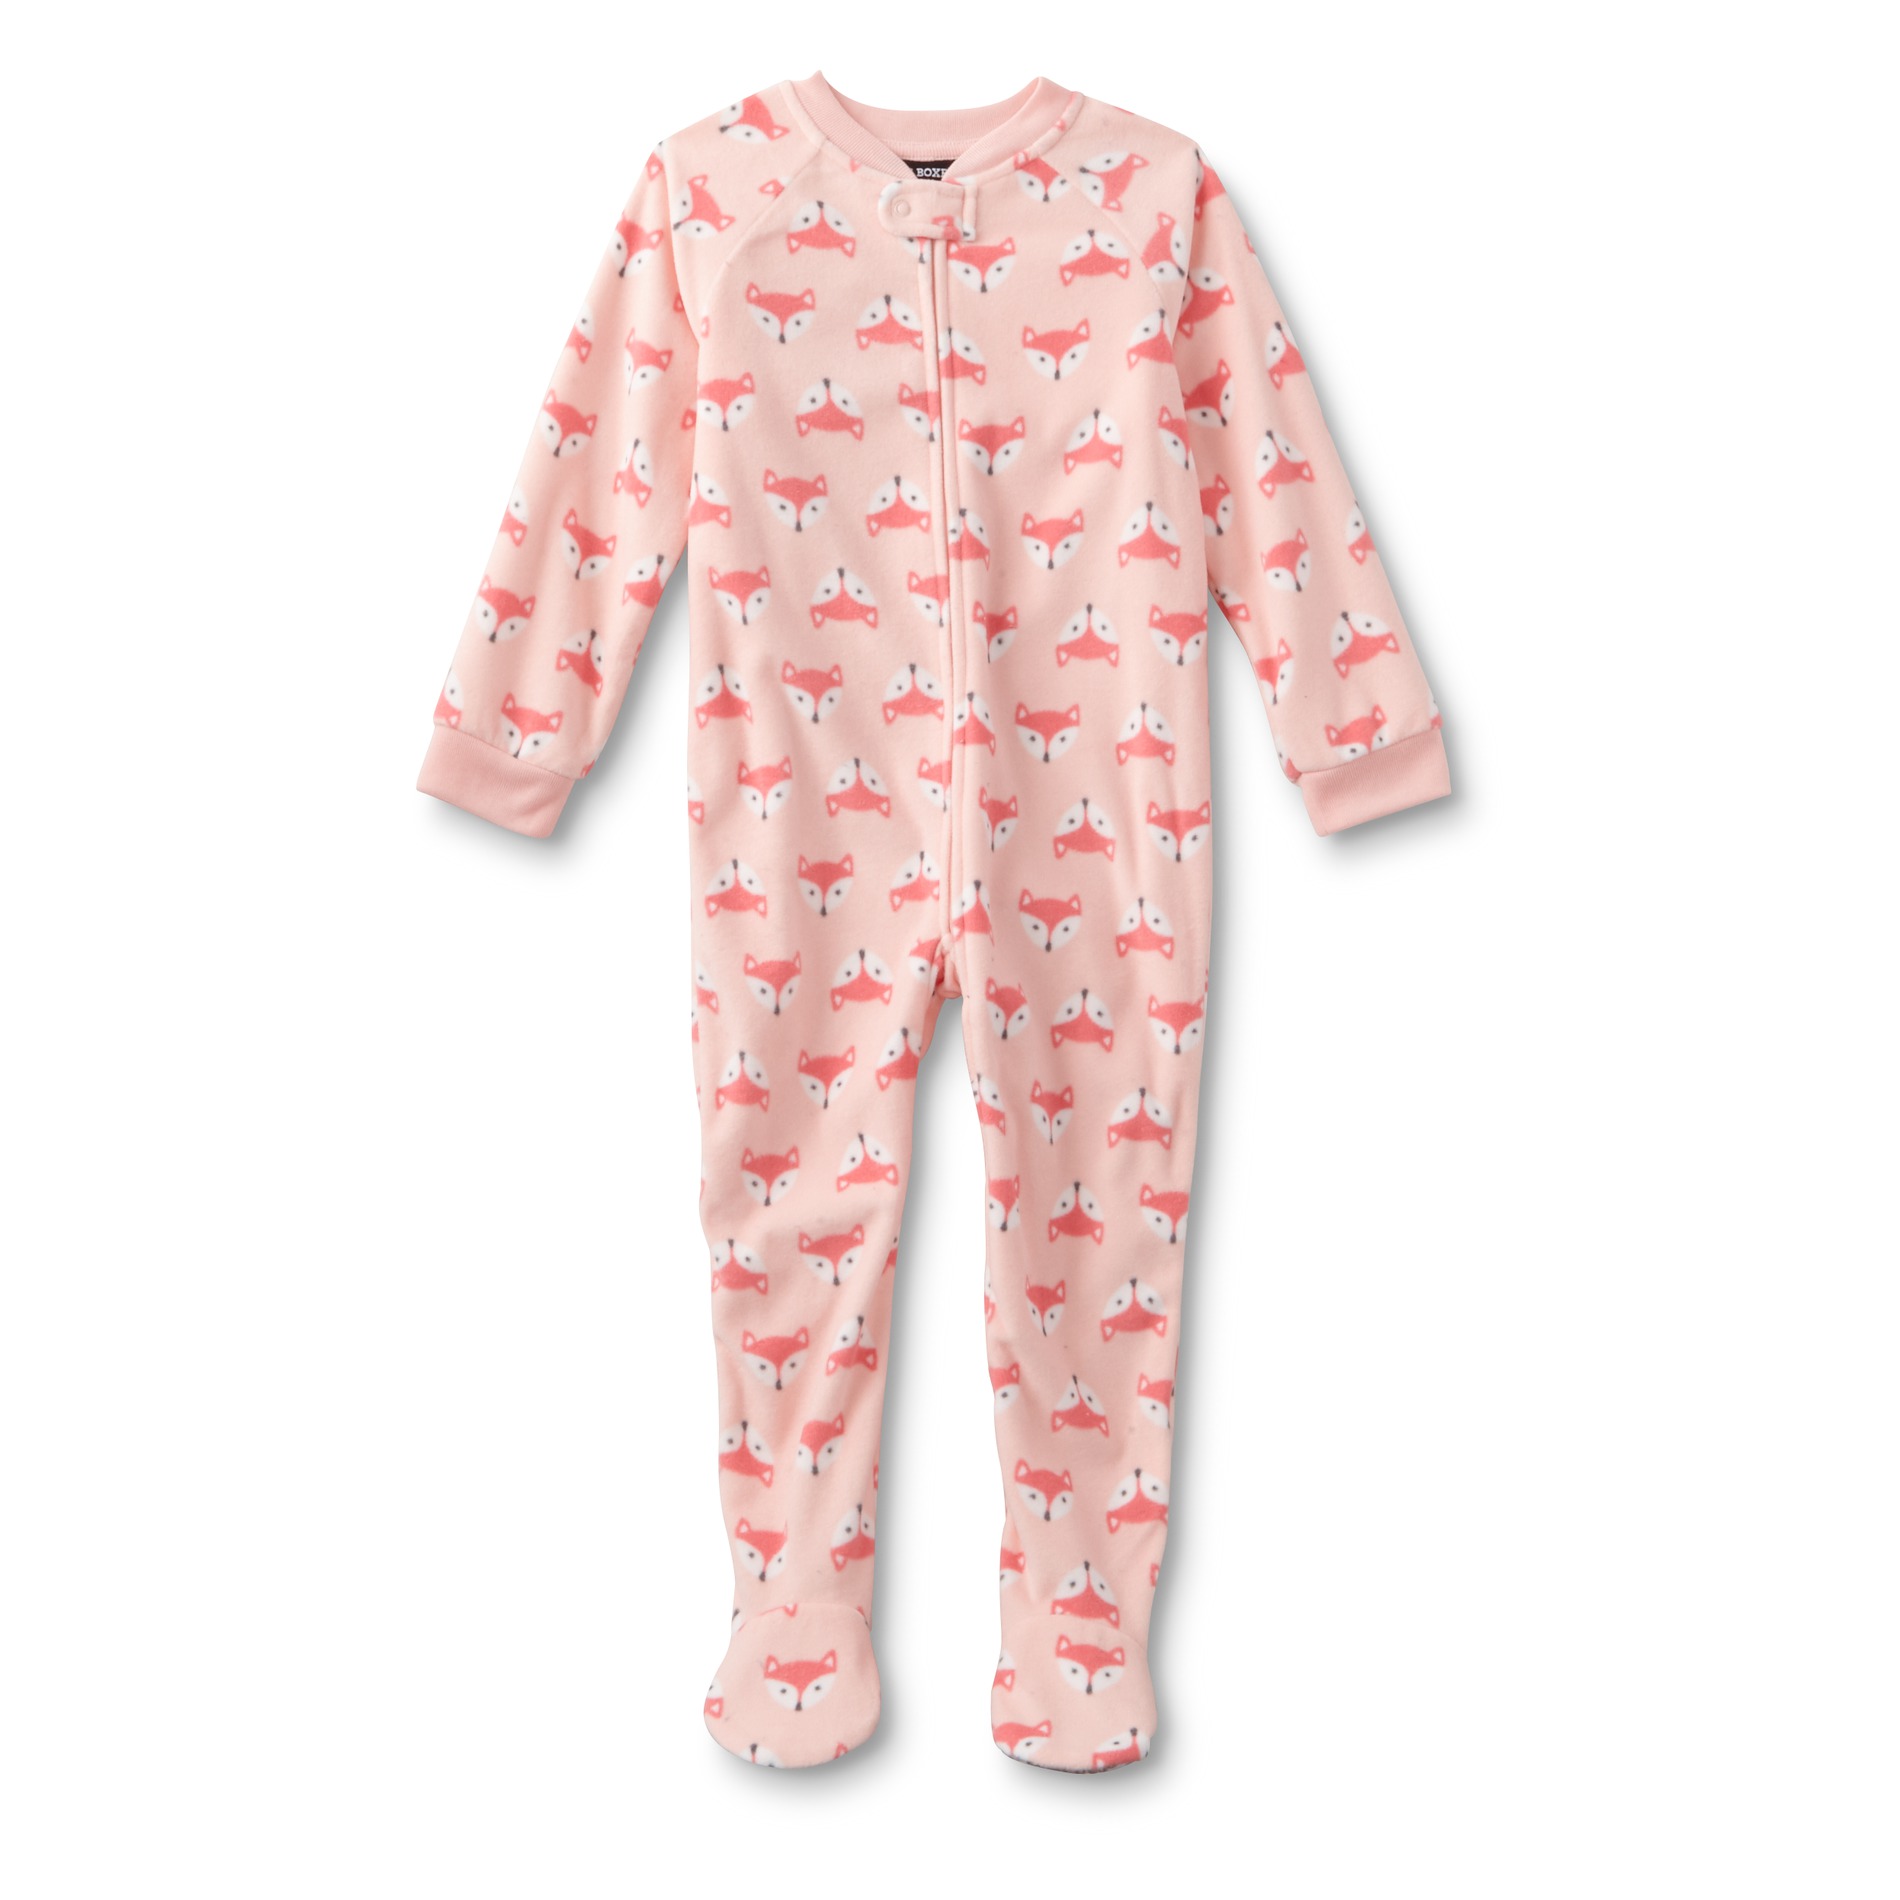 Joe Boxer Infant & Toddler Girl's Sleeper Pajamas - Fox